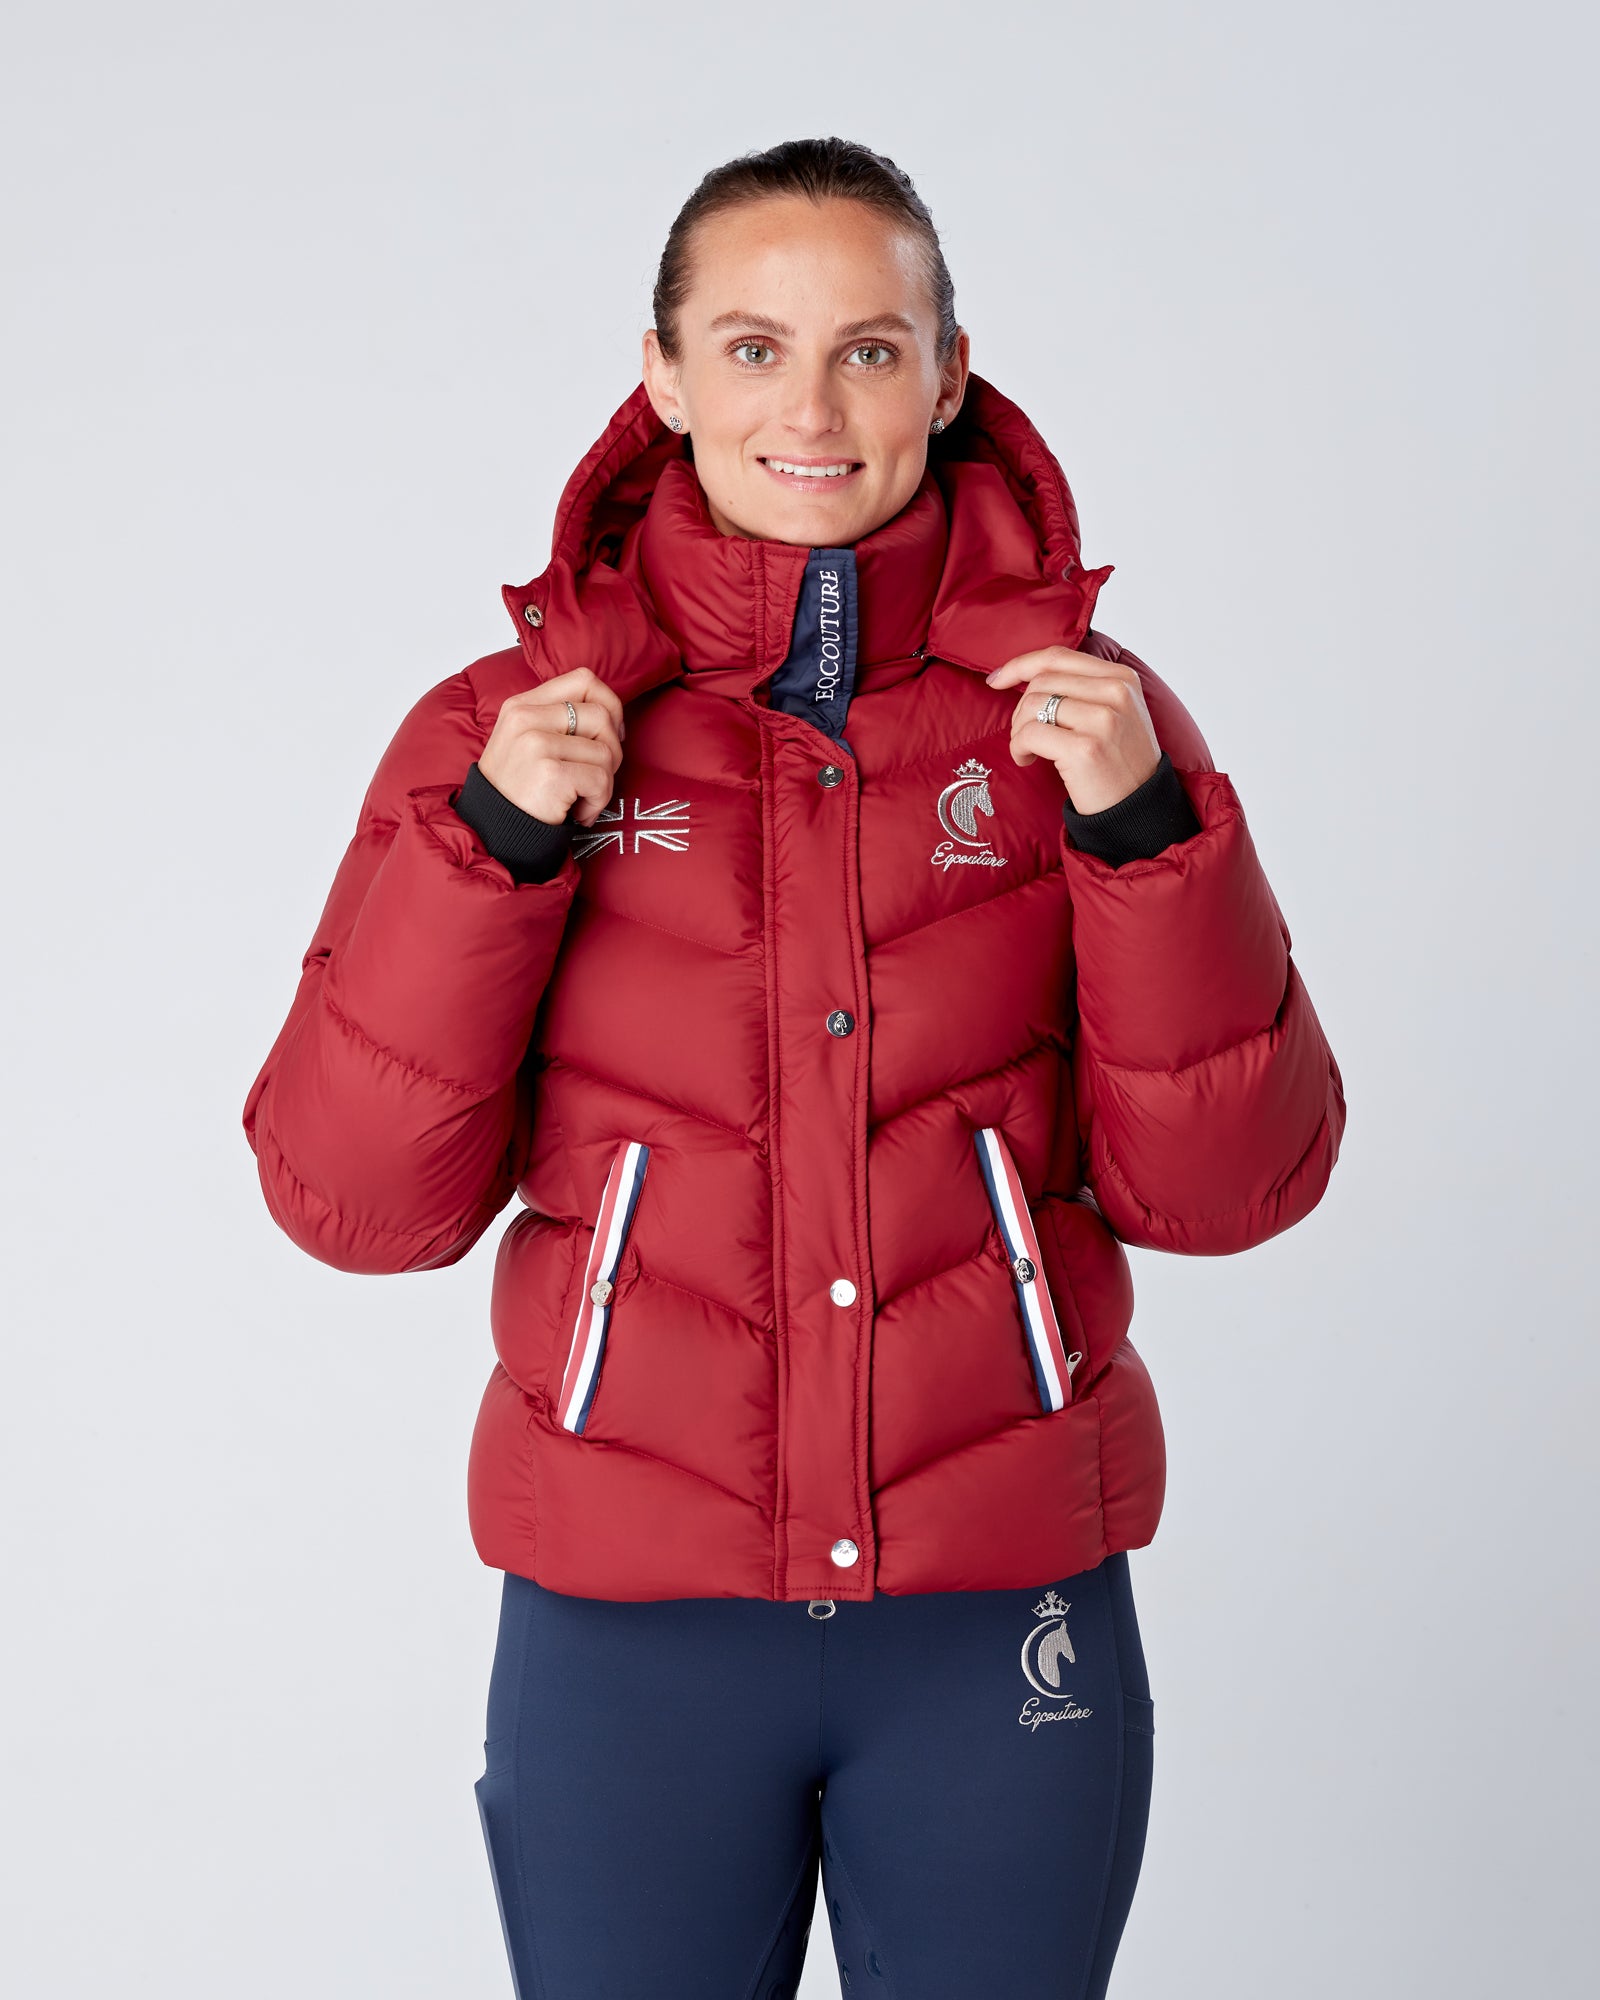 Exclusive Short Chilli Red Puffer Coat  / Jacket - Detachable Hood